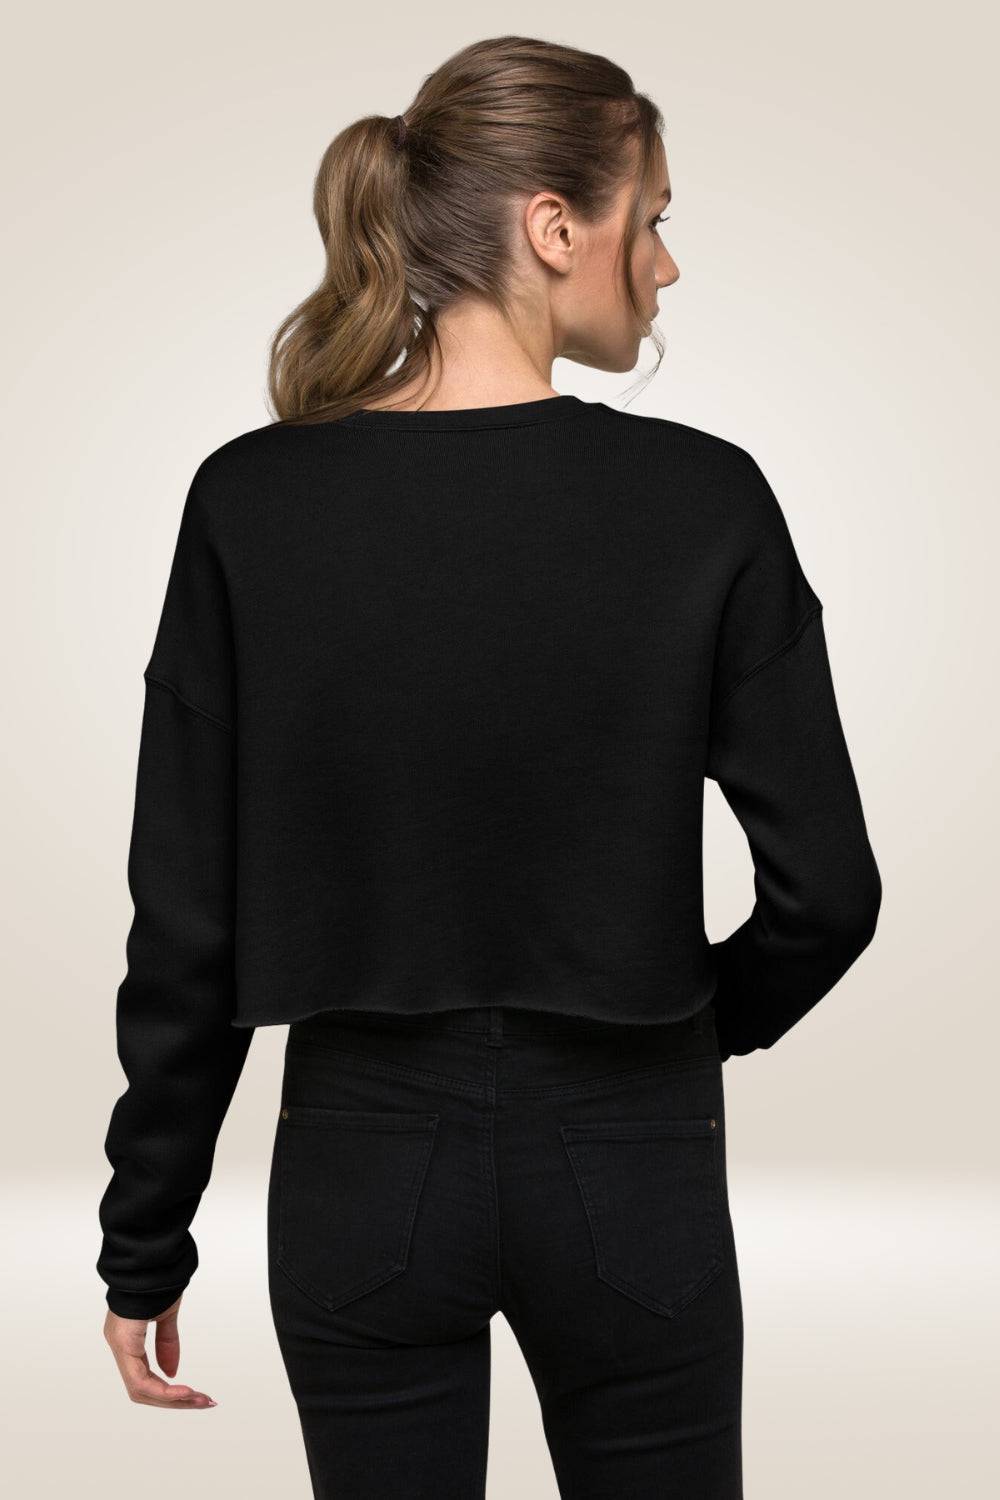 TGC X Reaction Black Cropped Sweatshirt - TGC Boutique - Cropped Sweatshirt